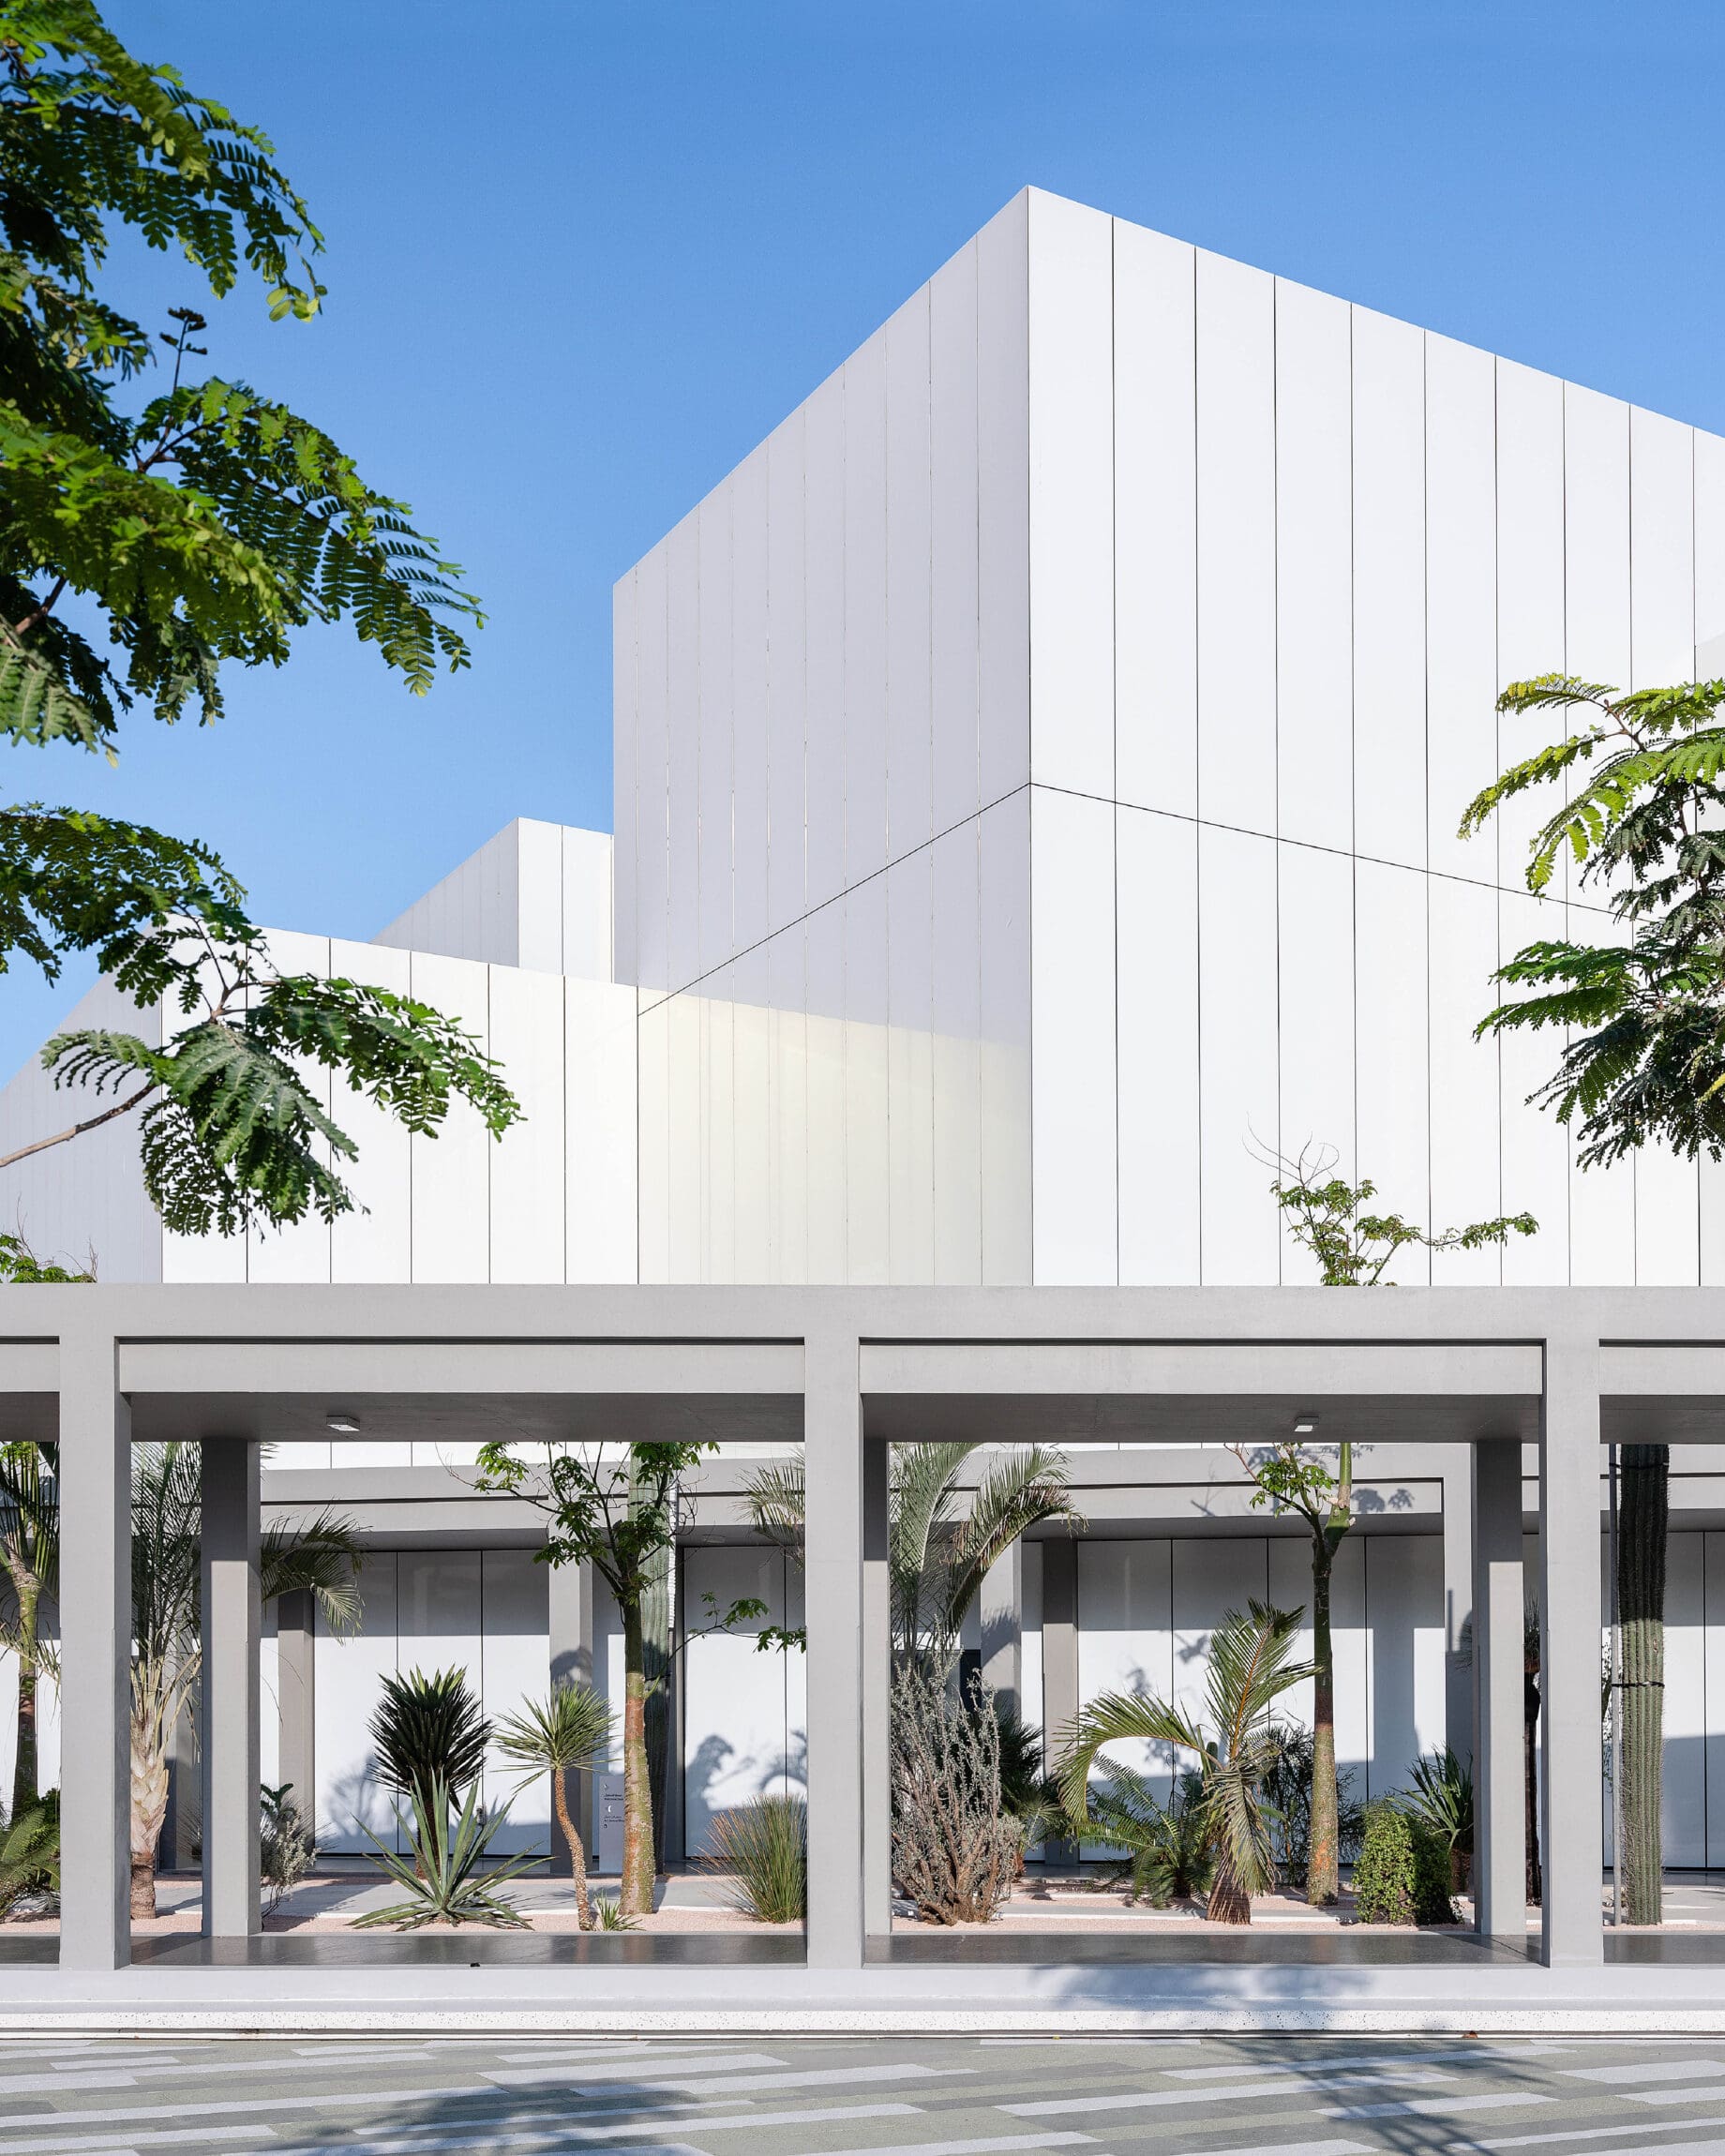 The best art galleries in Dubai | The white facade of Jameel Art Centre in Dubai